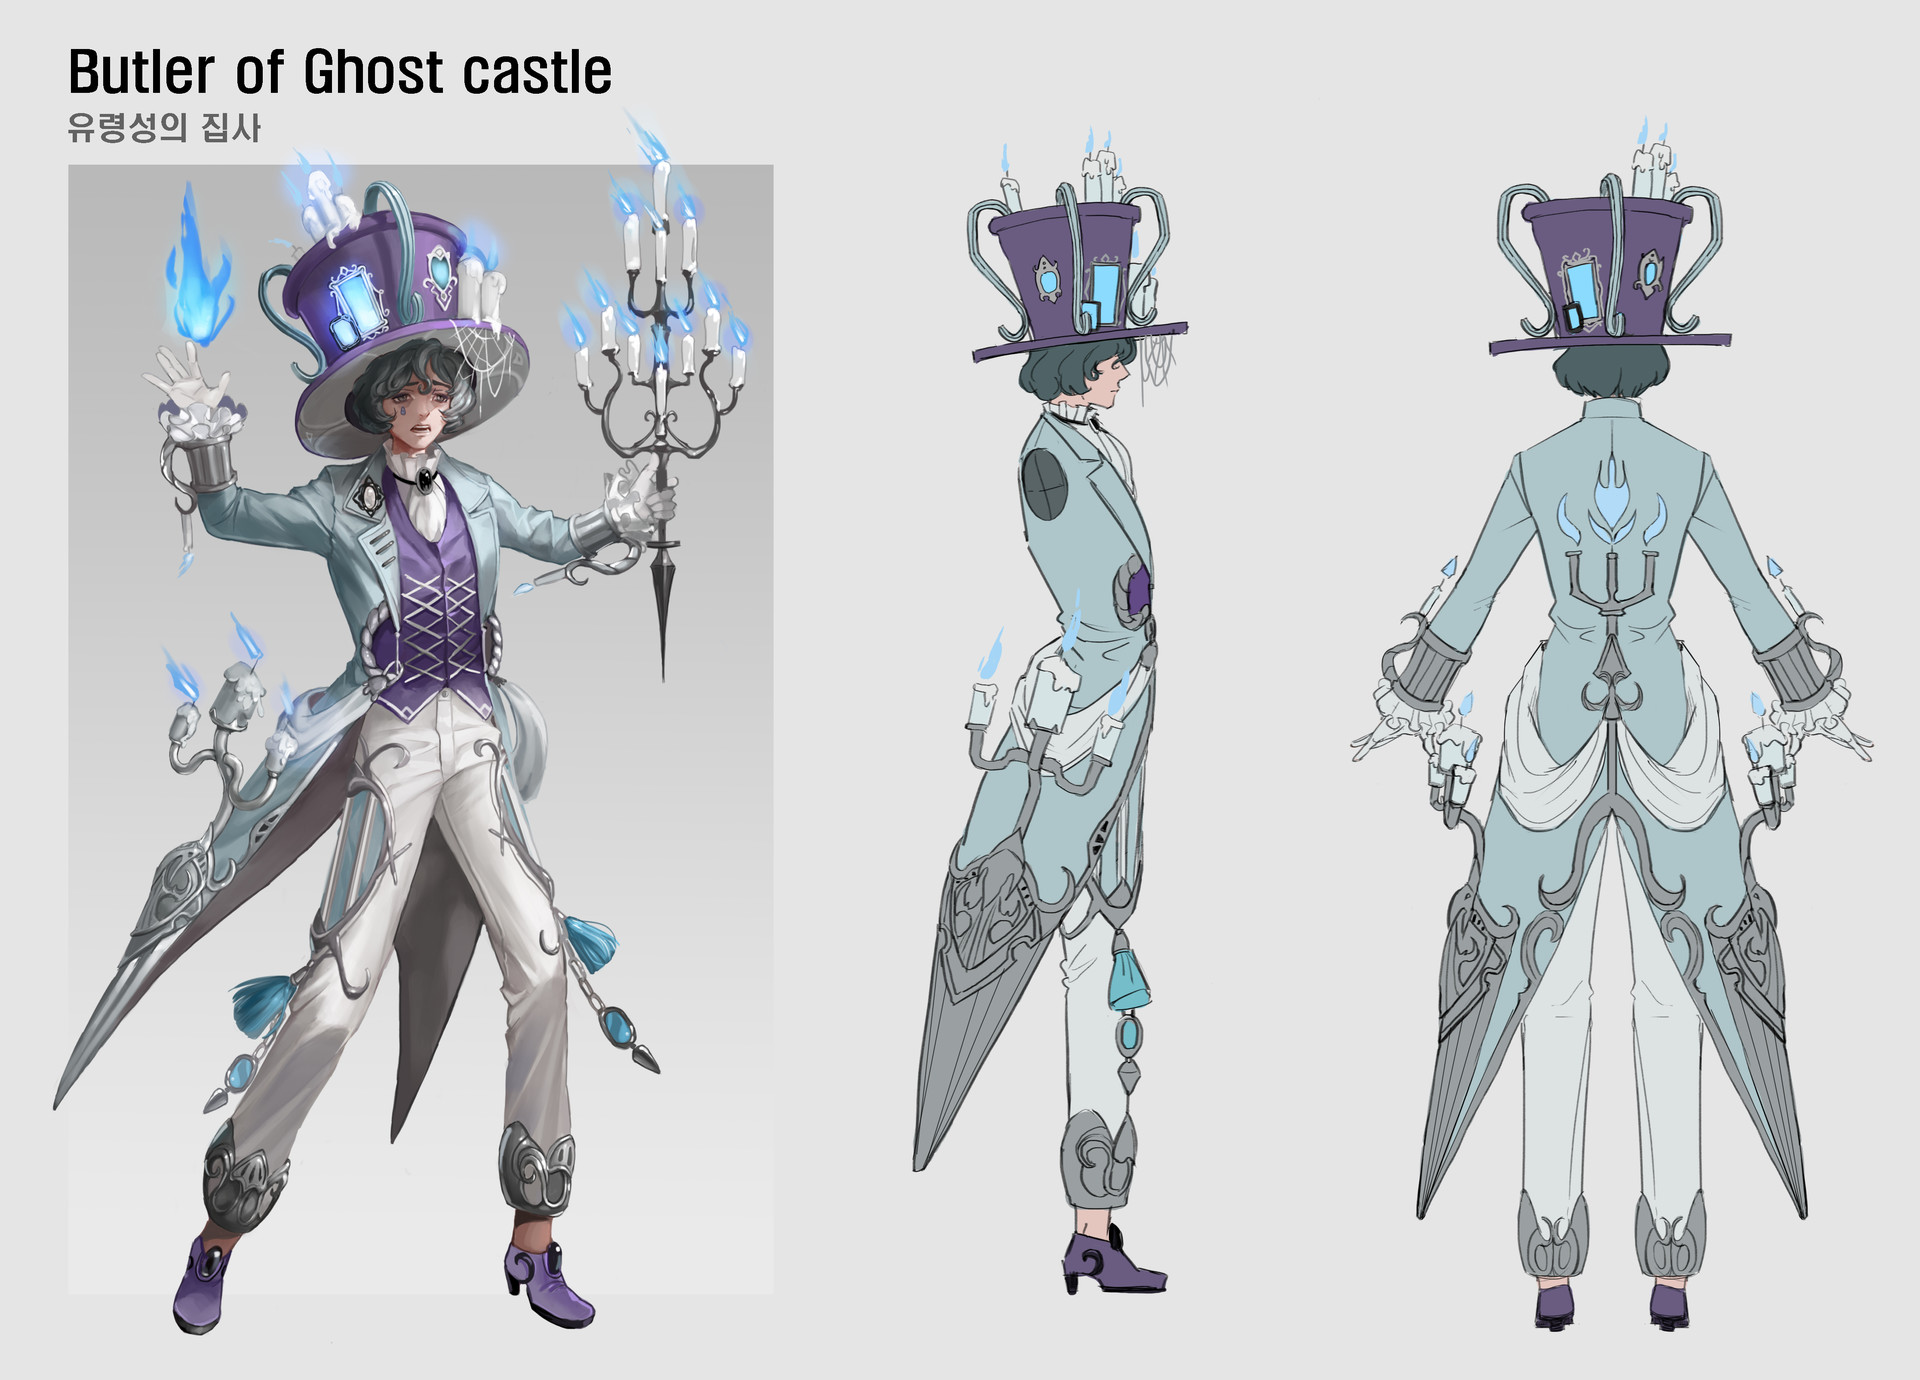 ArtStation - Butler of Ghost castle